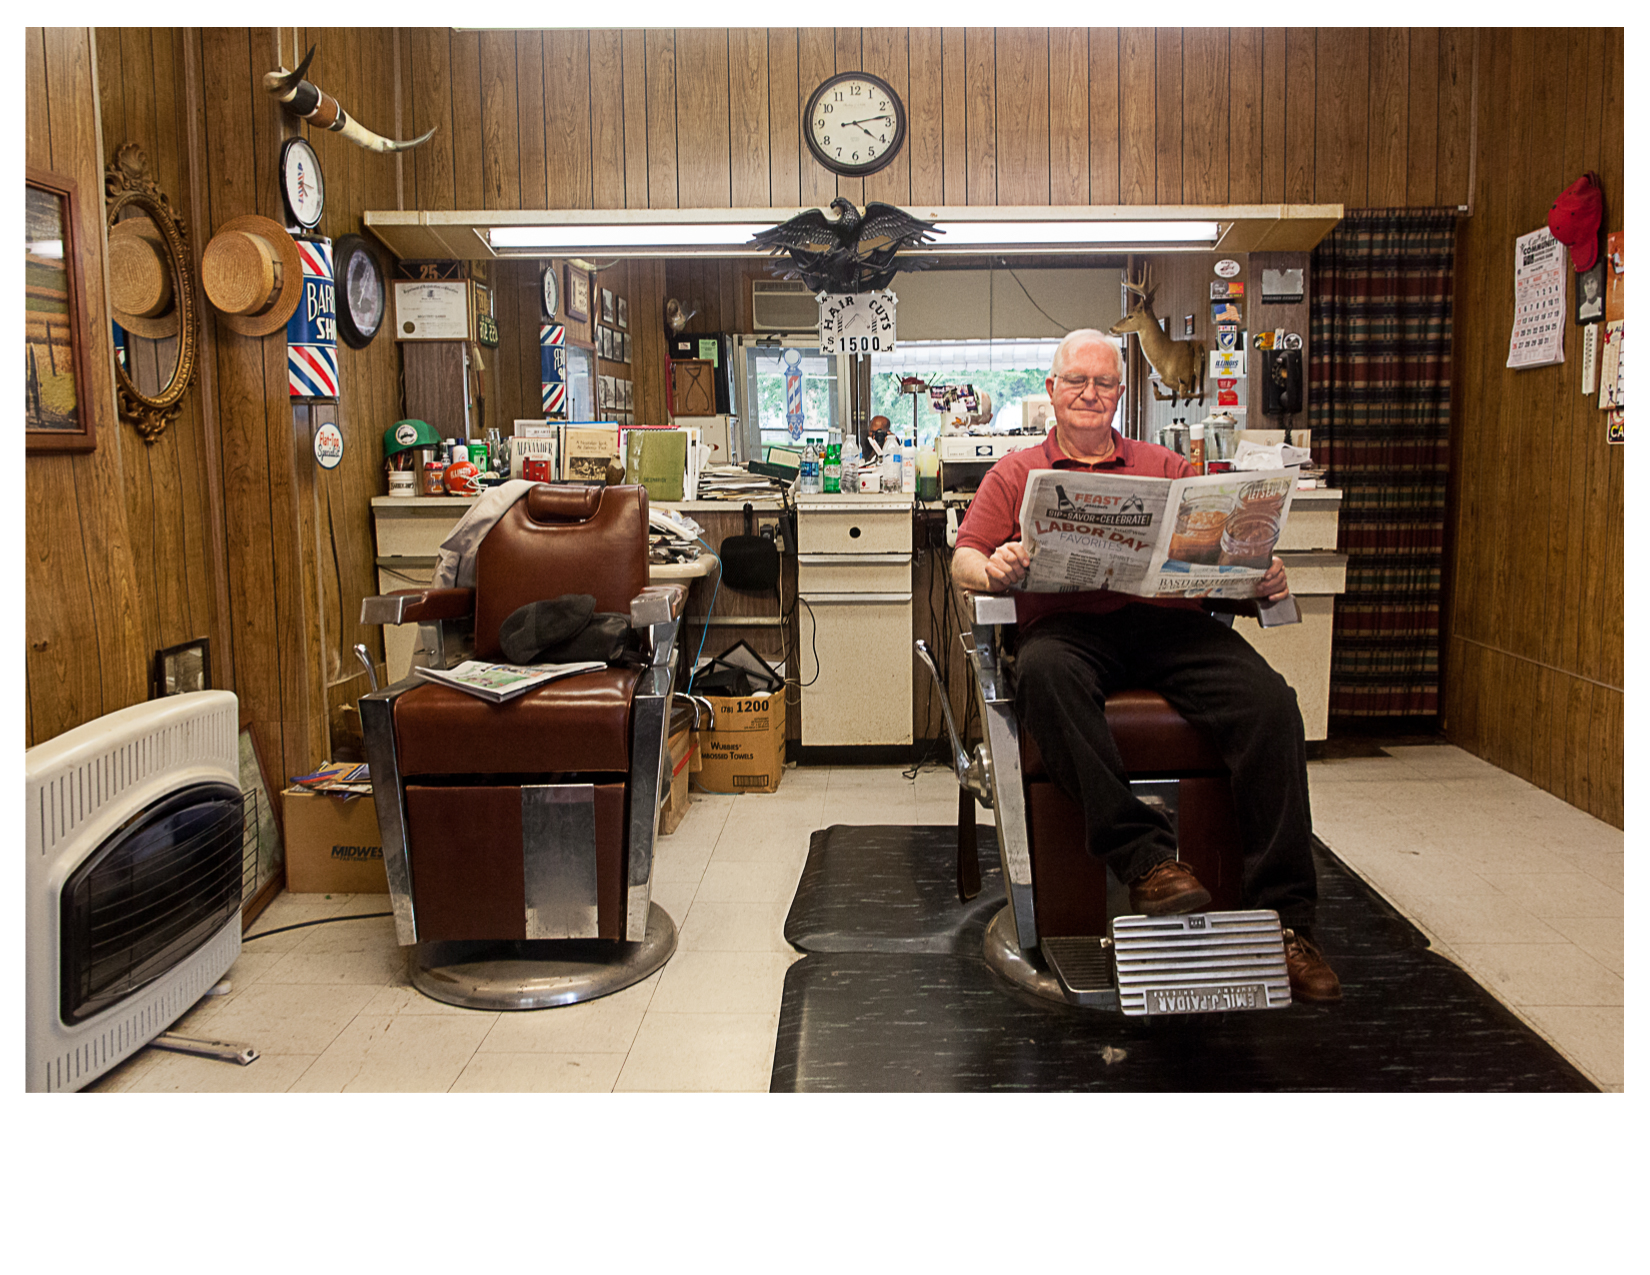 Norm inside his Barber Shop, Salem, IL